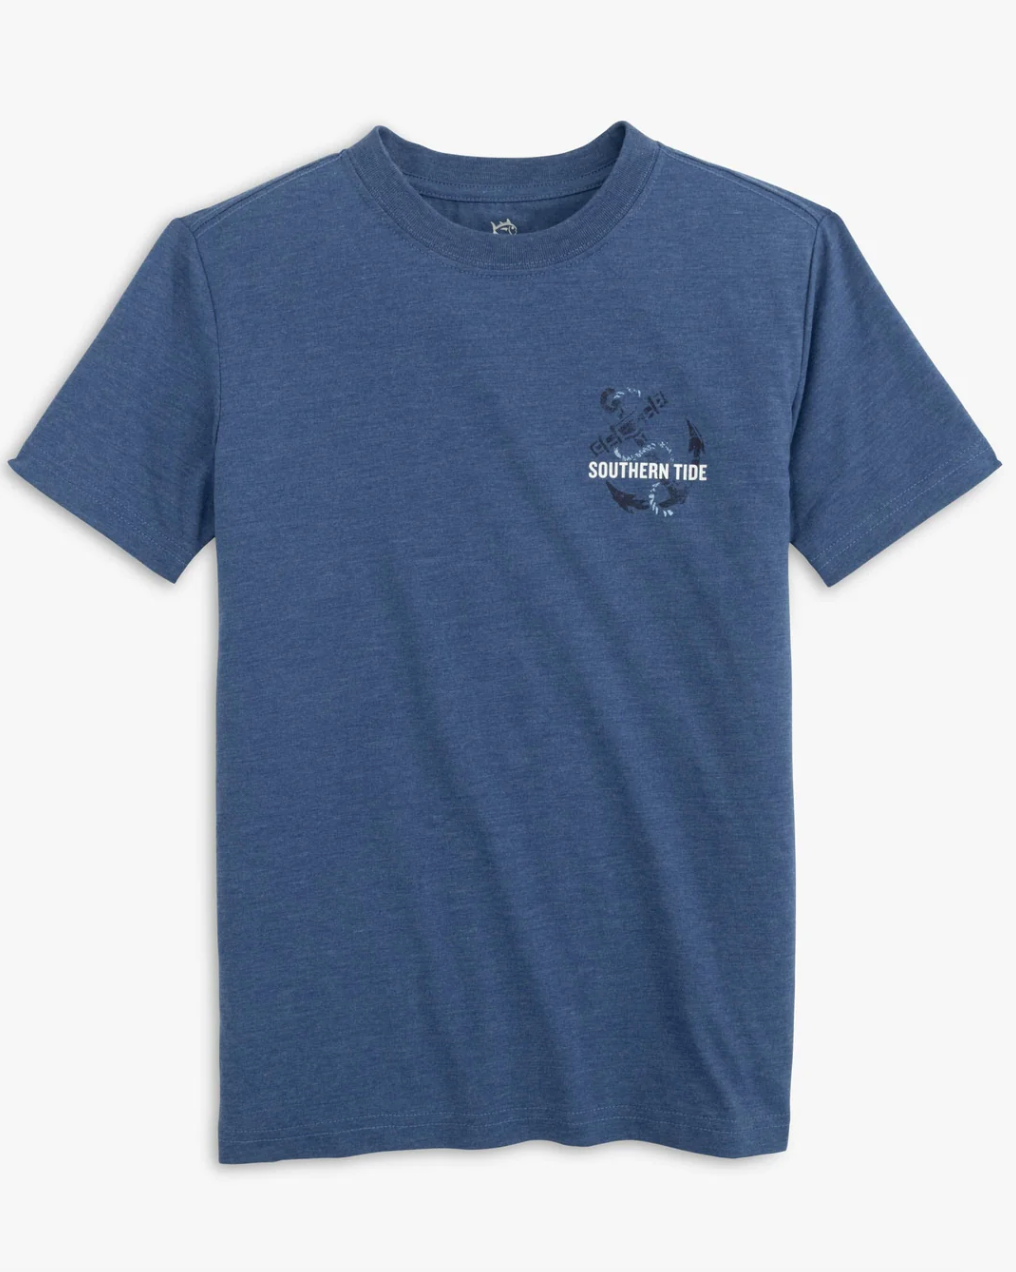 Youth Treasure Hunters SS T-Shirt Pompeii Blue